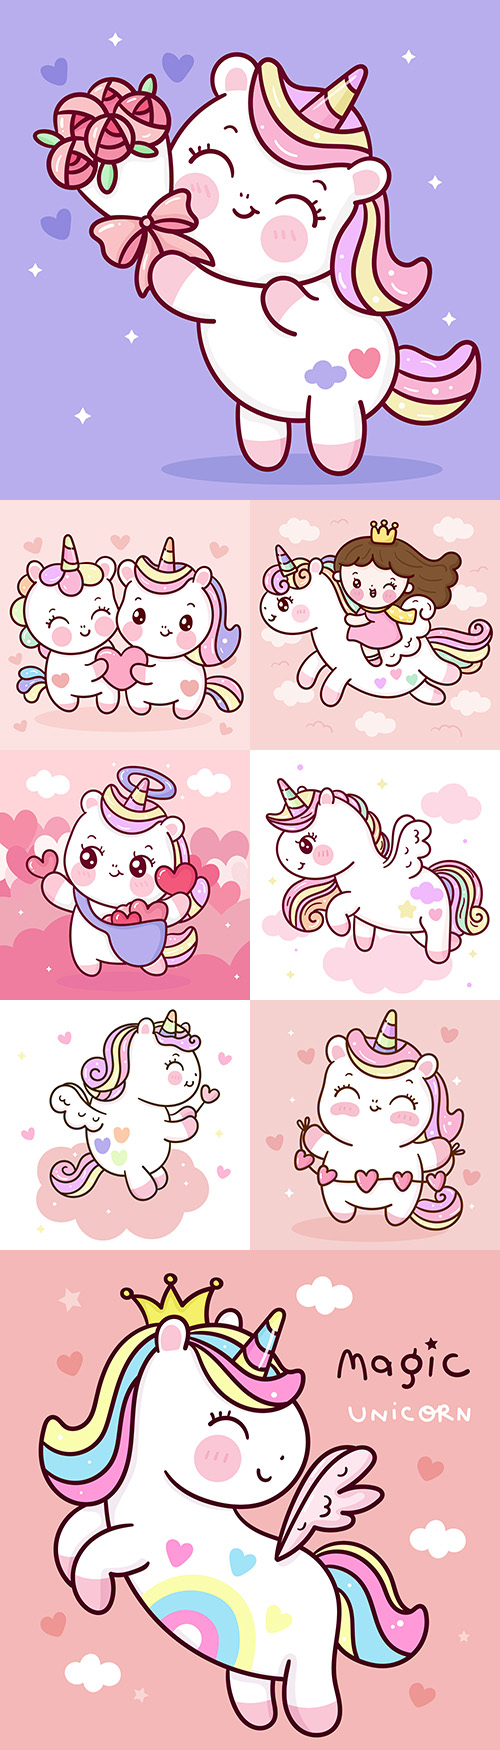 Cute unicorn princess cartoon with Pegasus wing
